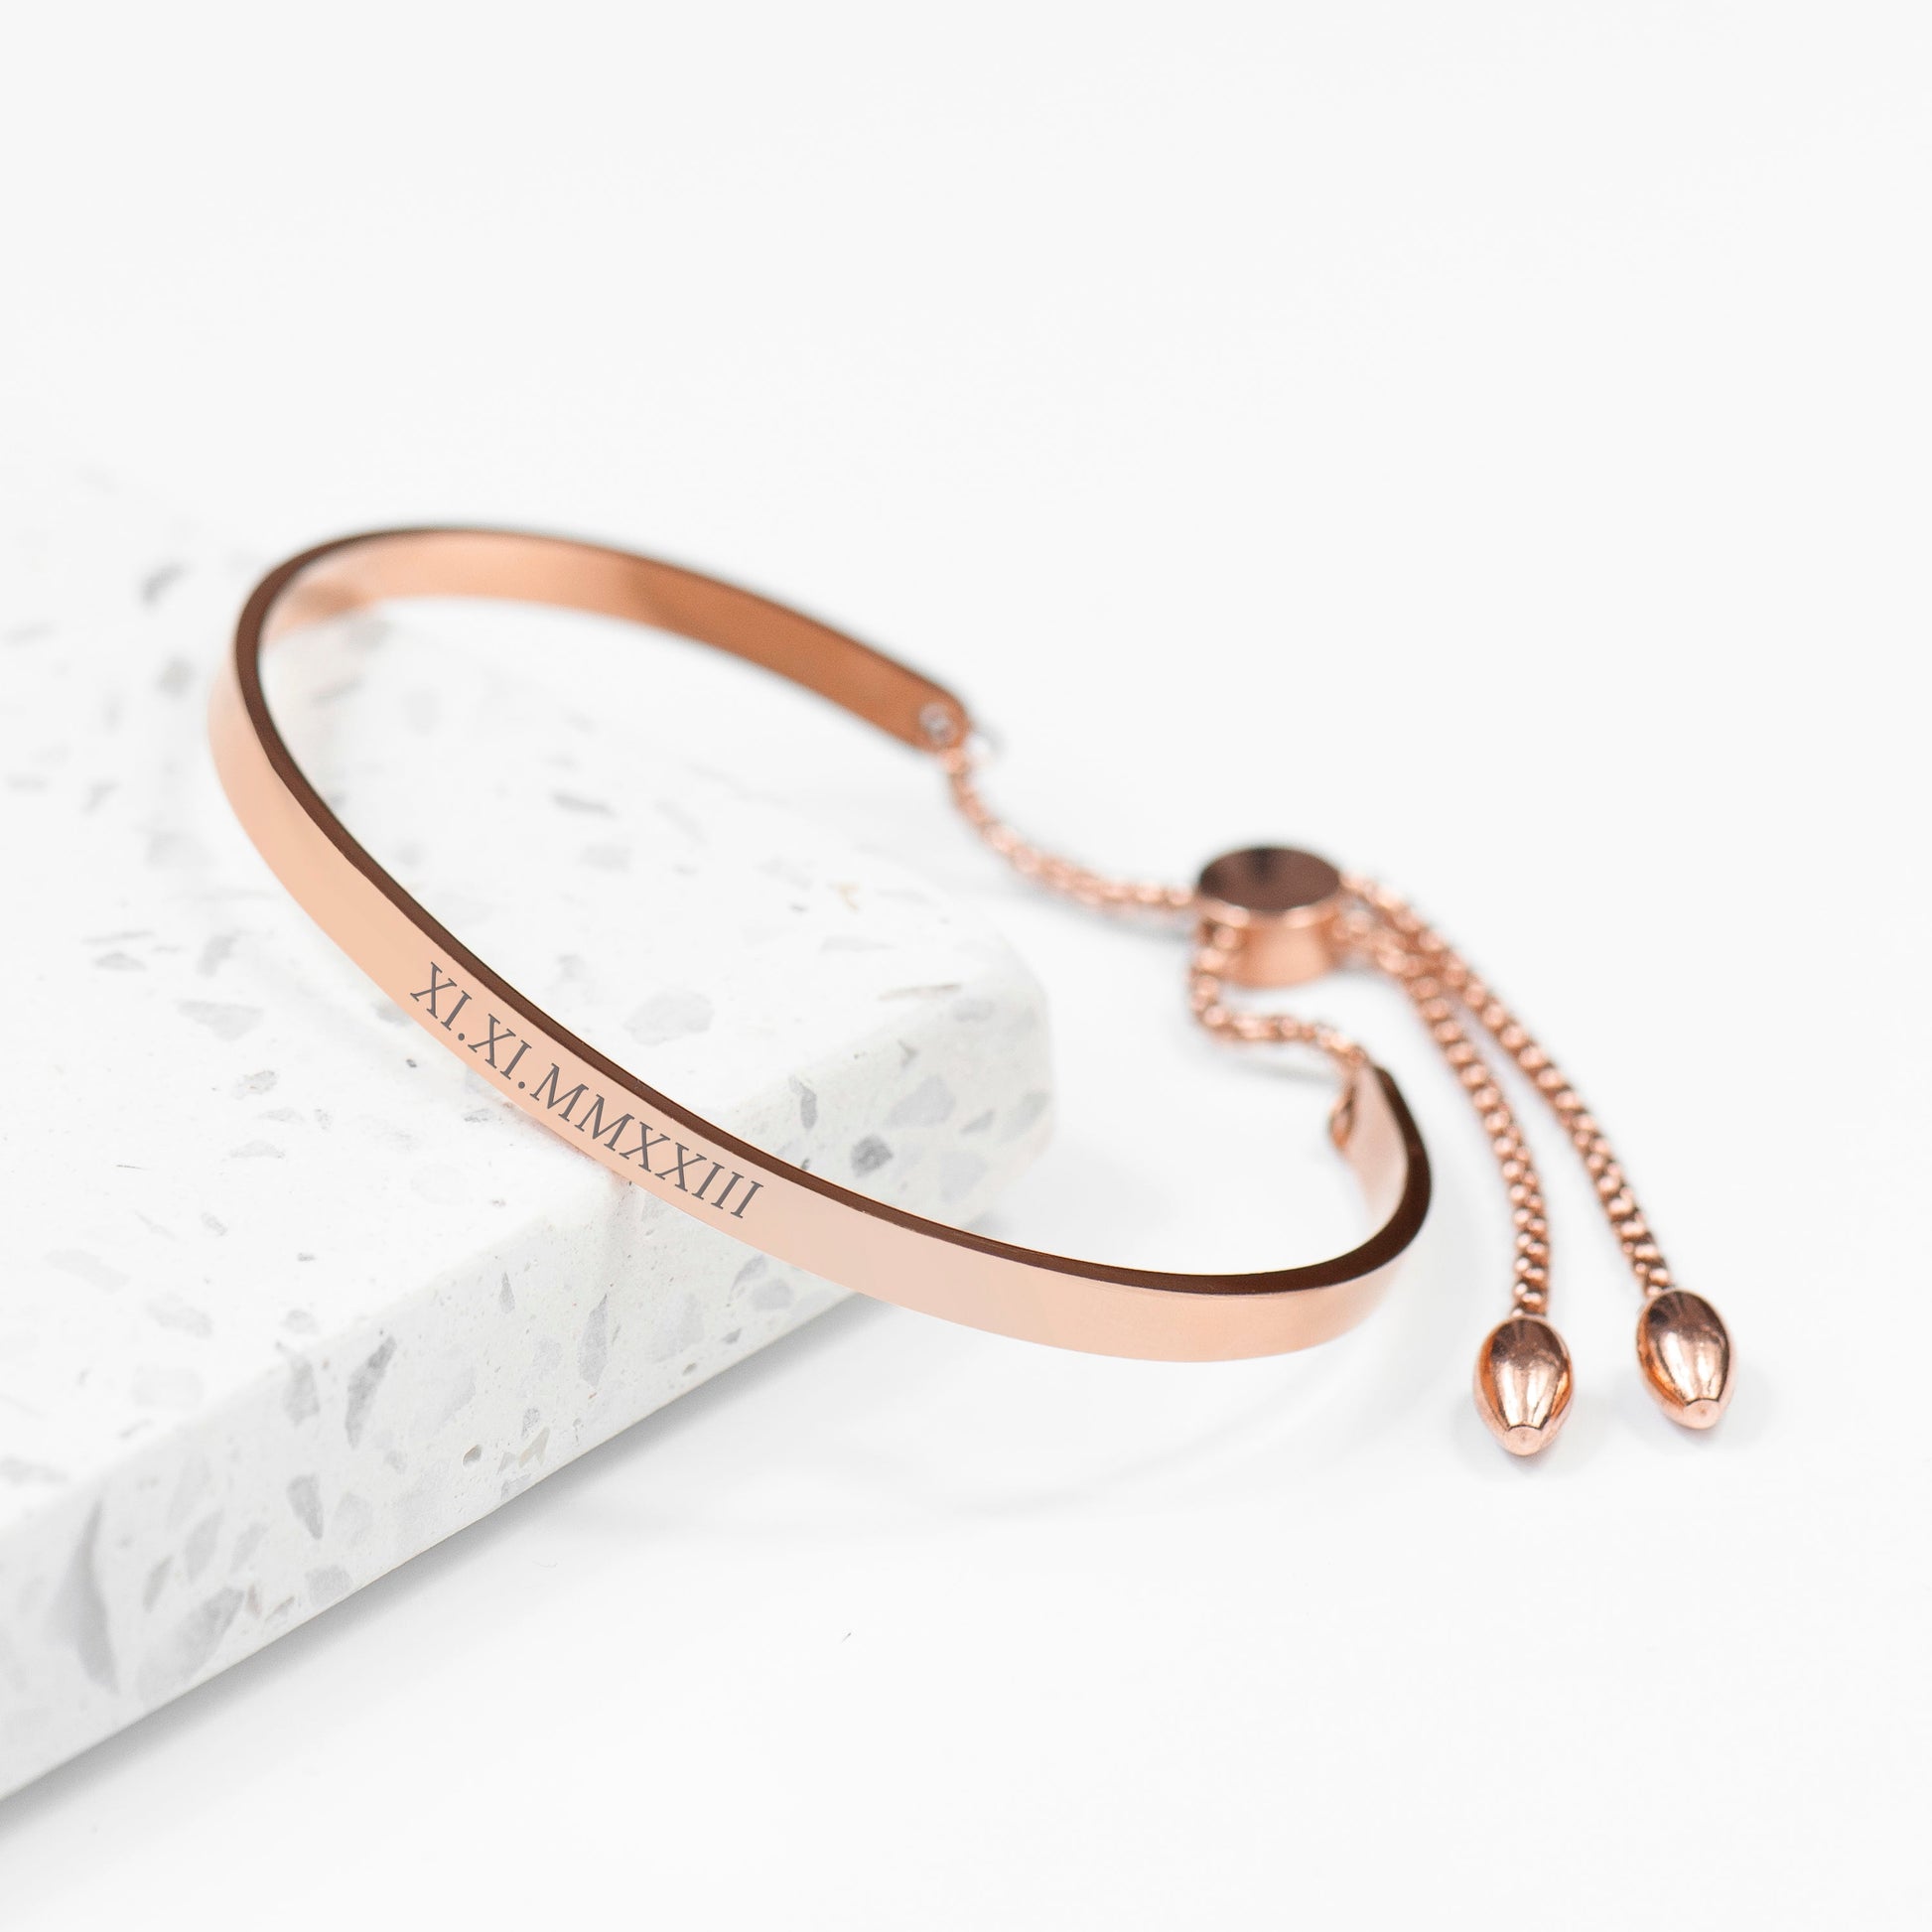 Personalized Bracelets - Personalized Rose Gold Affirmation Bangle Bracelet 